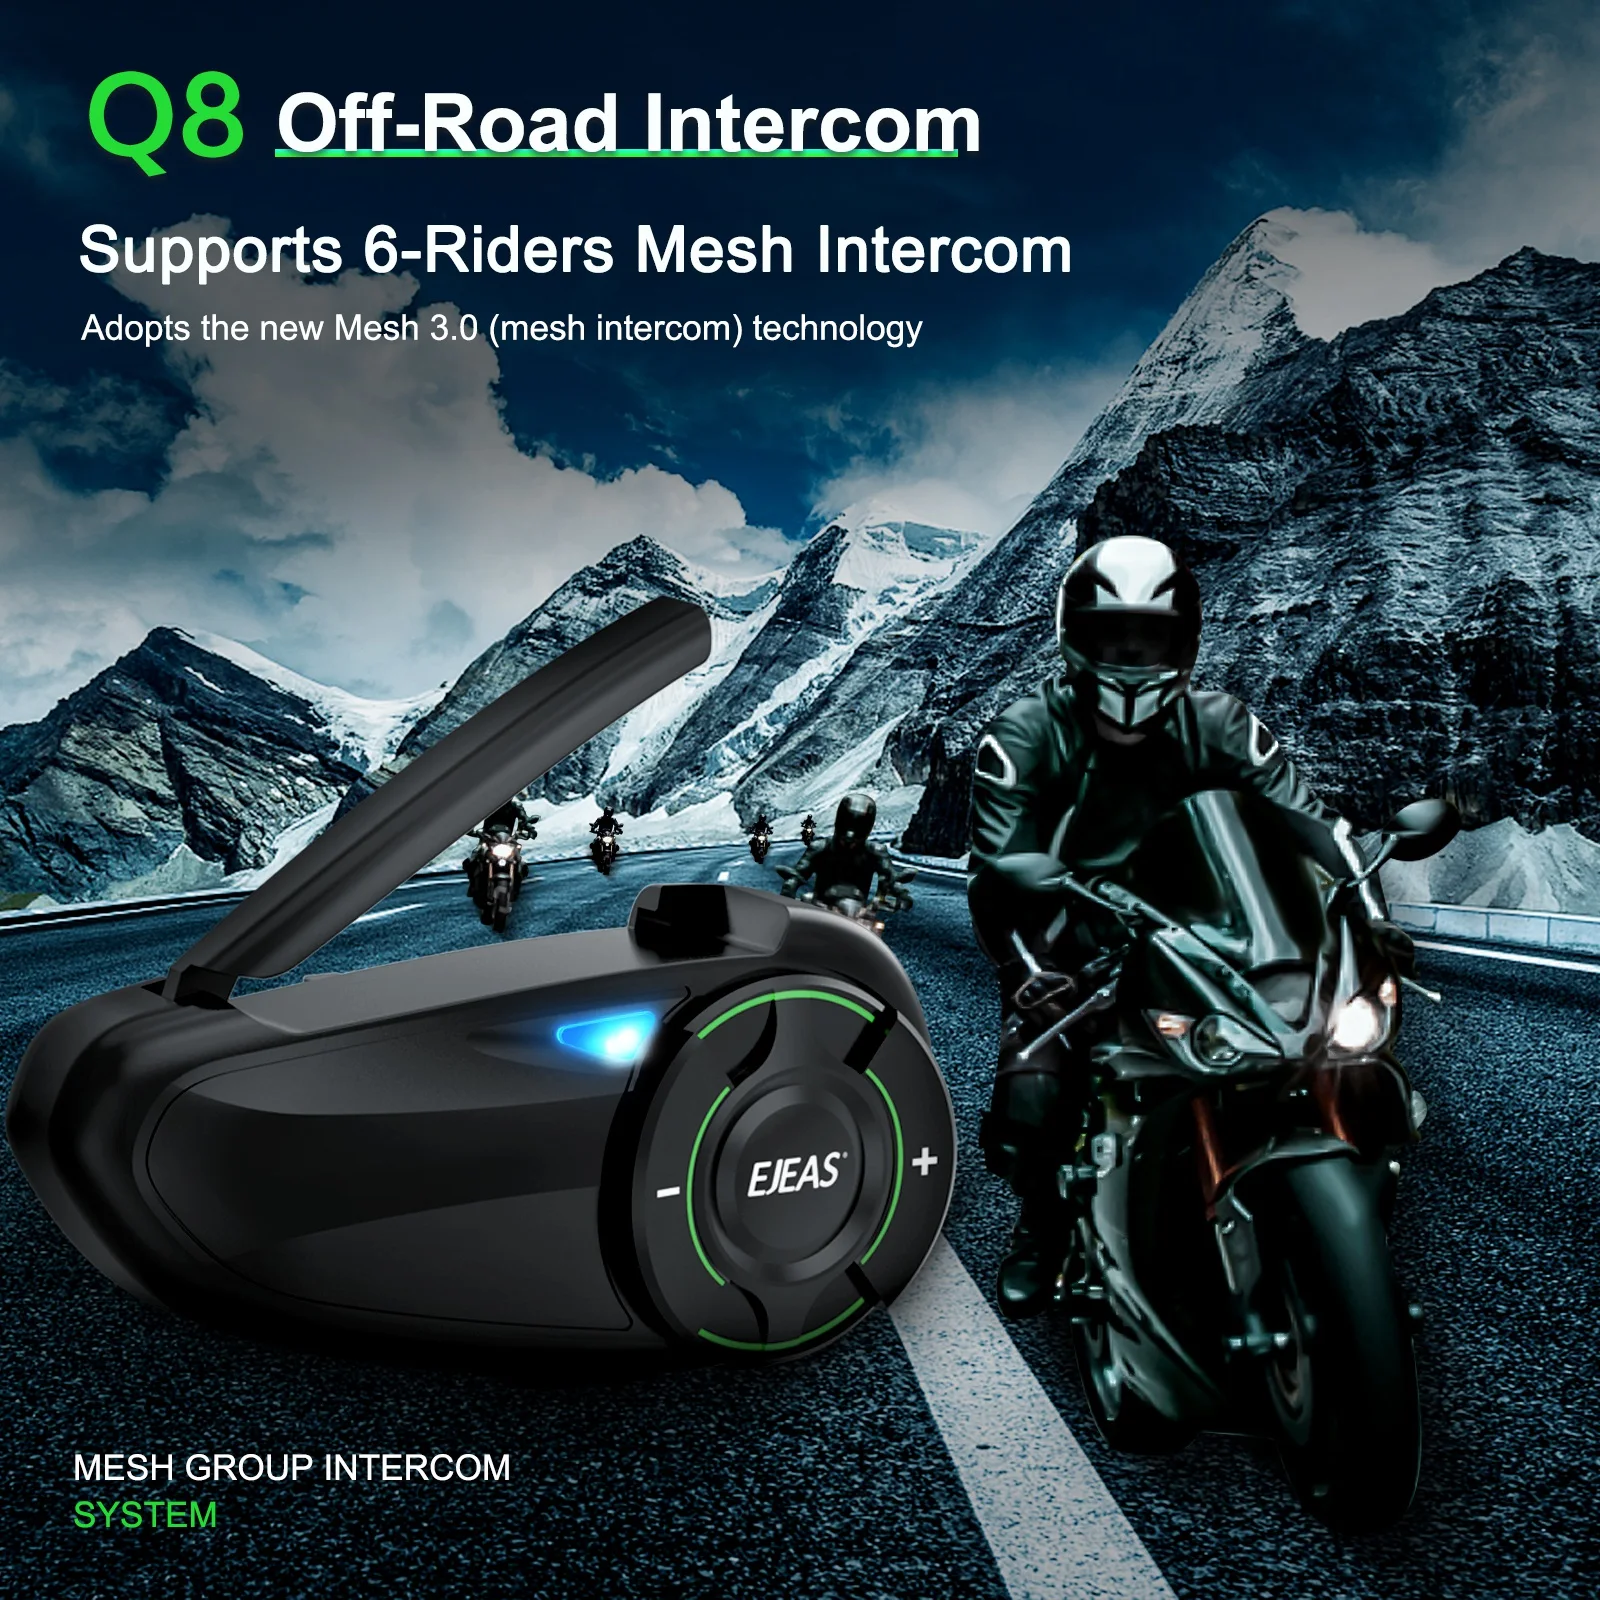 

EJEAS 1Pc Q8 Mesh Group Intercom System Motorcycle Helmet Headset Intercom Motorbike Bluetooth Interphone for 6 Riders